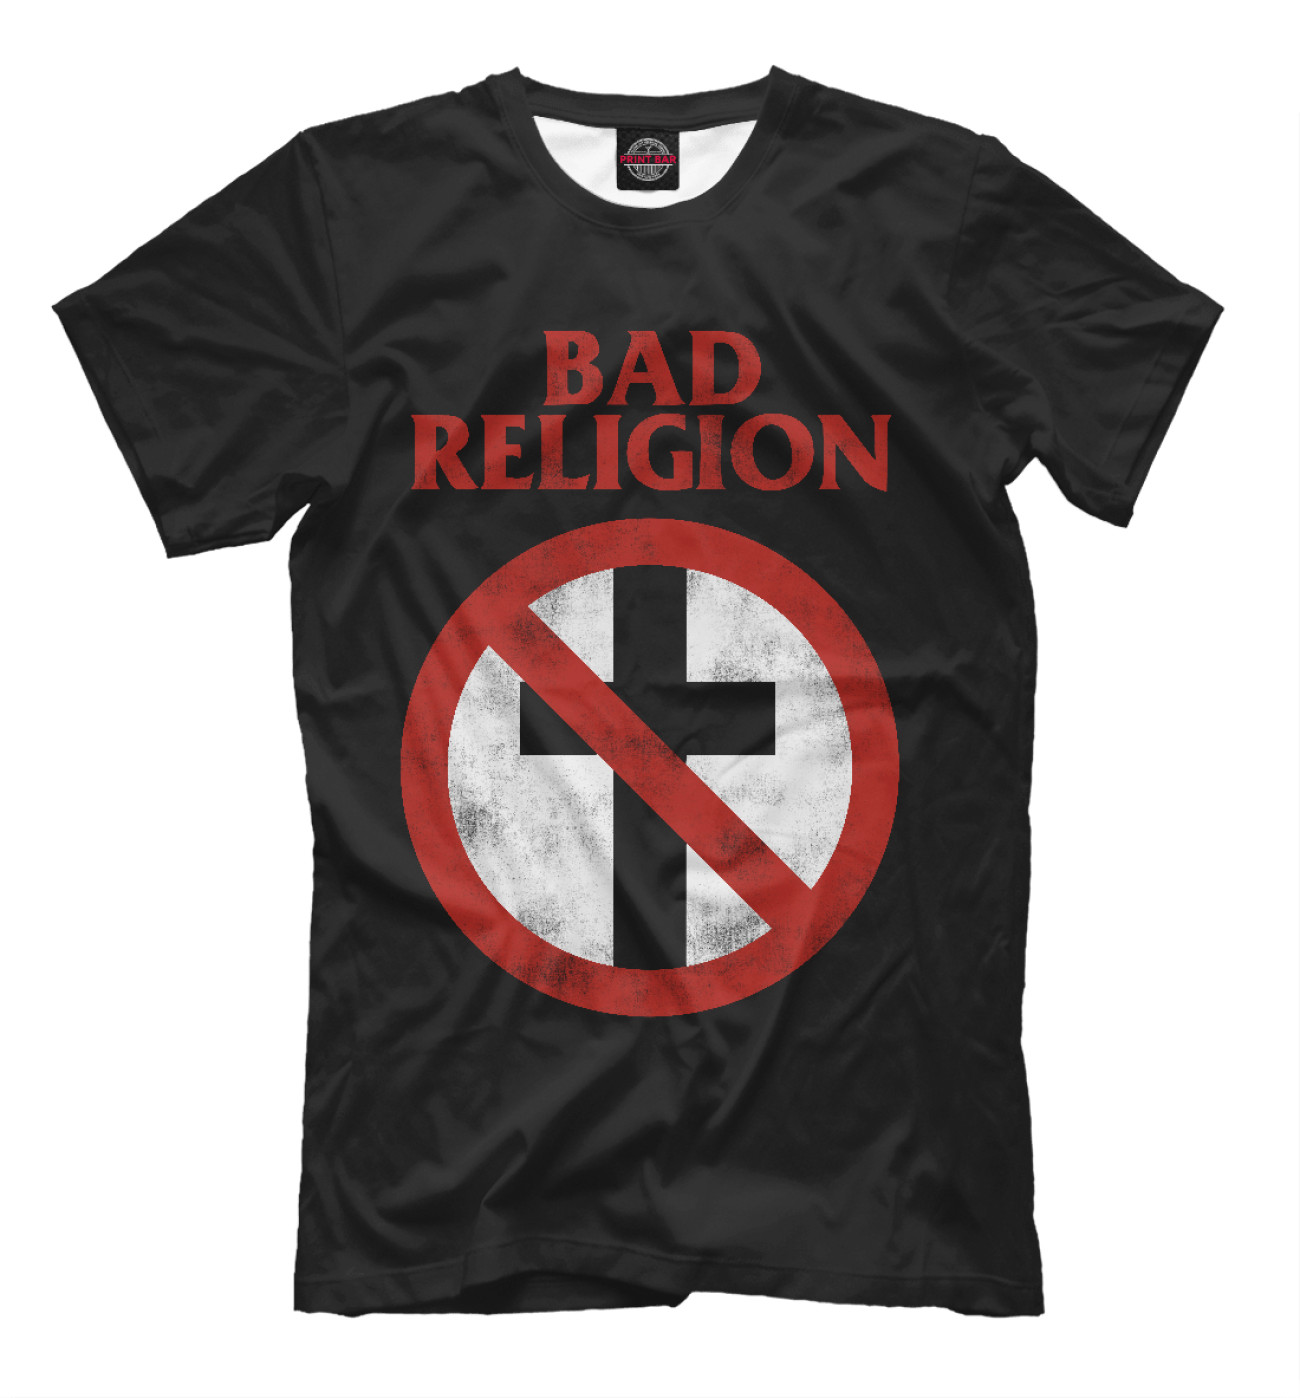 Мужская Футболка Bad Religion, артикул: BRL-179570-fut-2